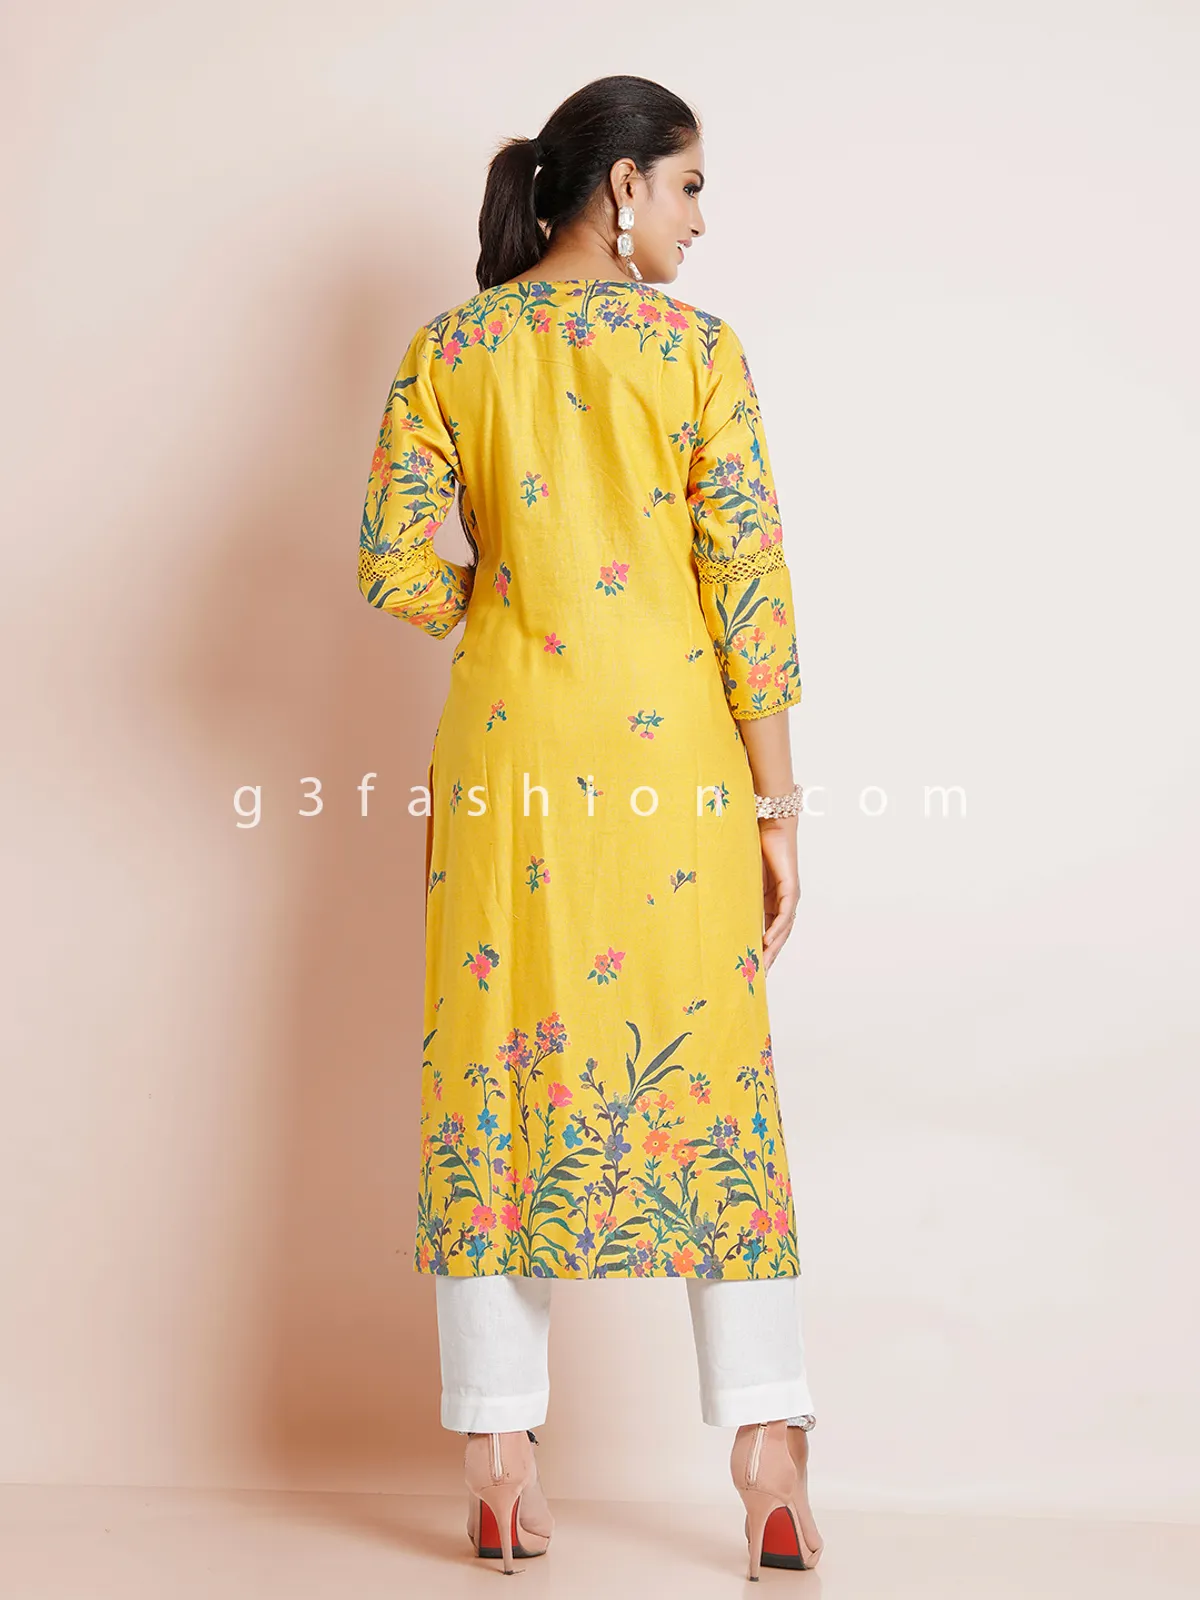 Dashing cotton mustard yellow casual wear kurti